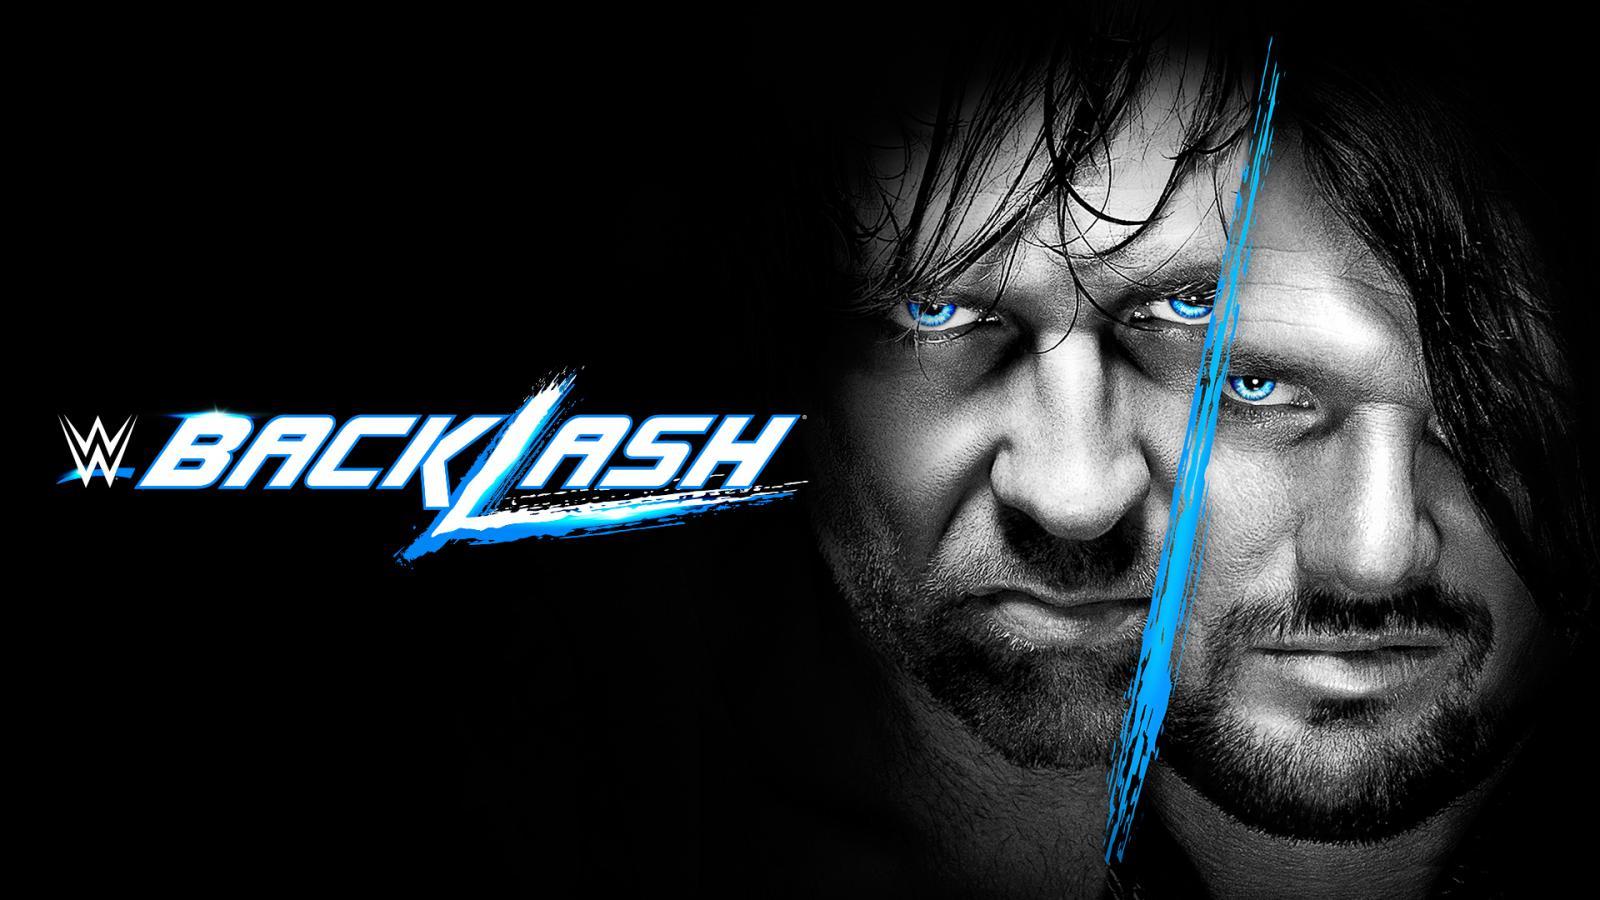 WWE Backlash preview & predictions: Dean Ambrose vs. AJ Styles